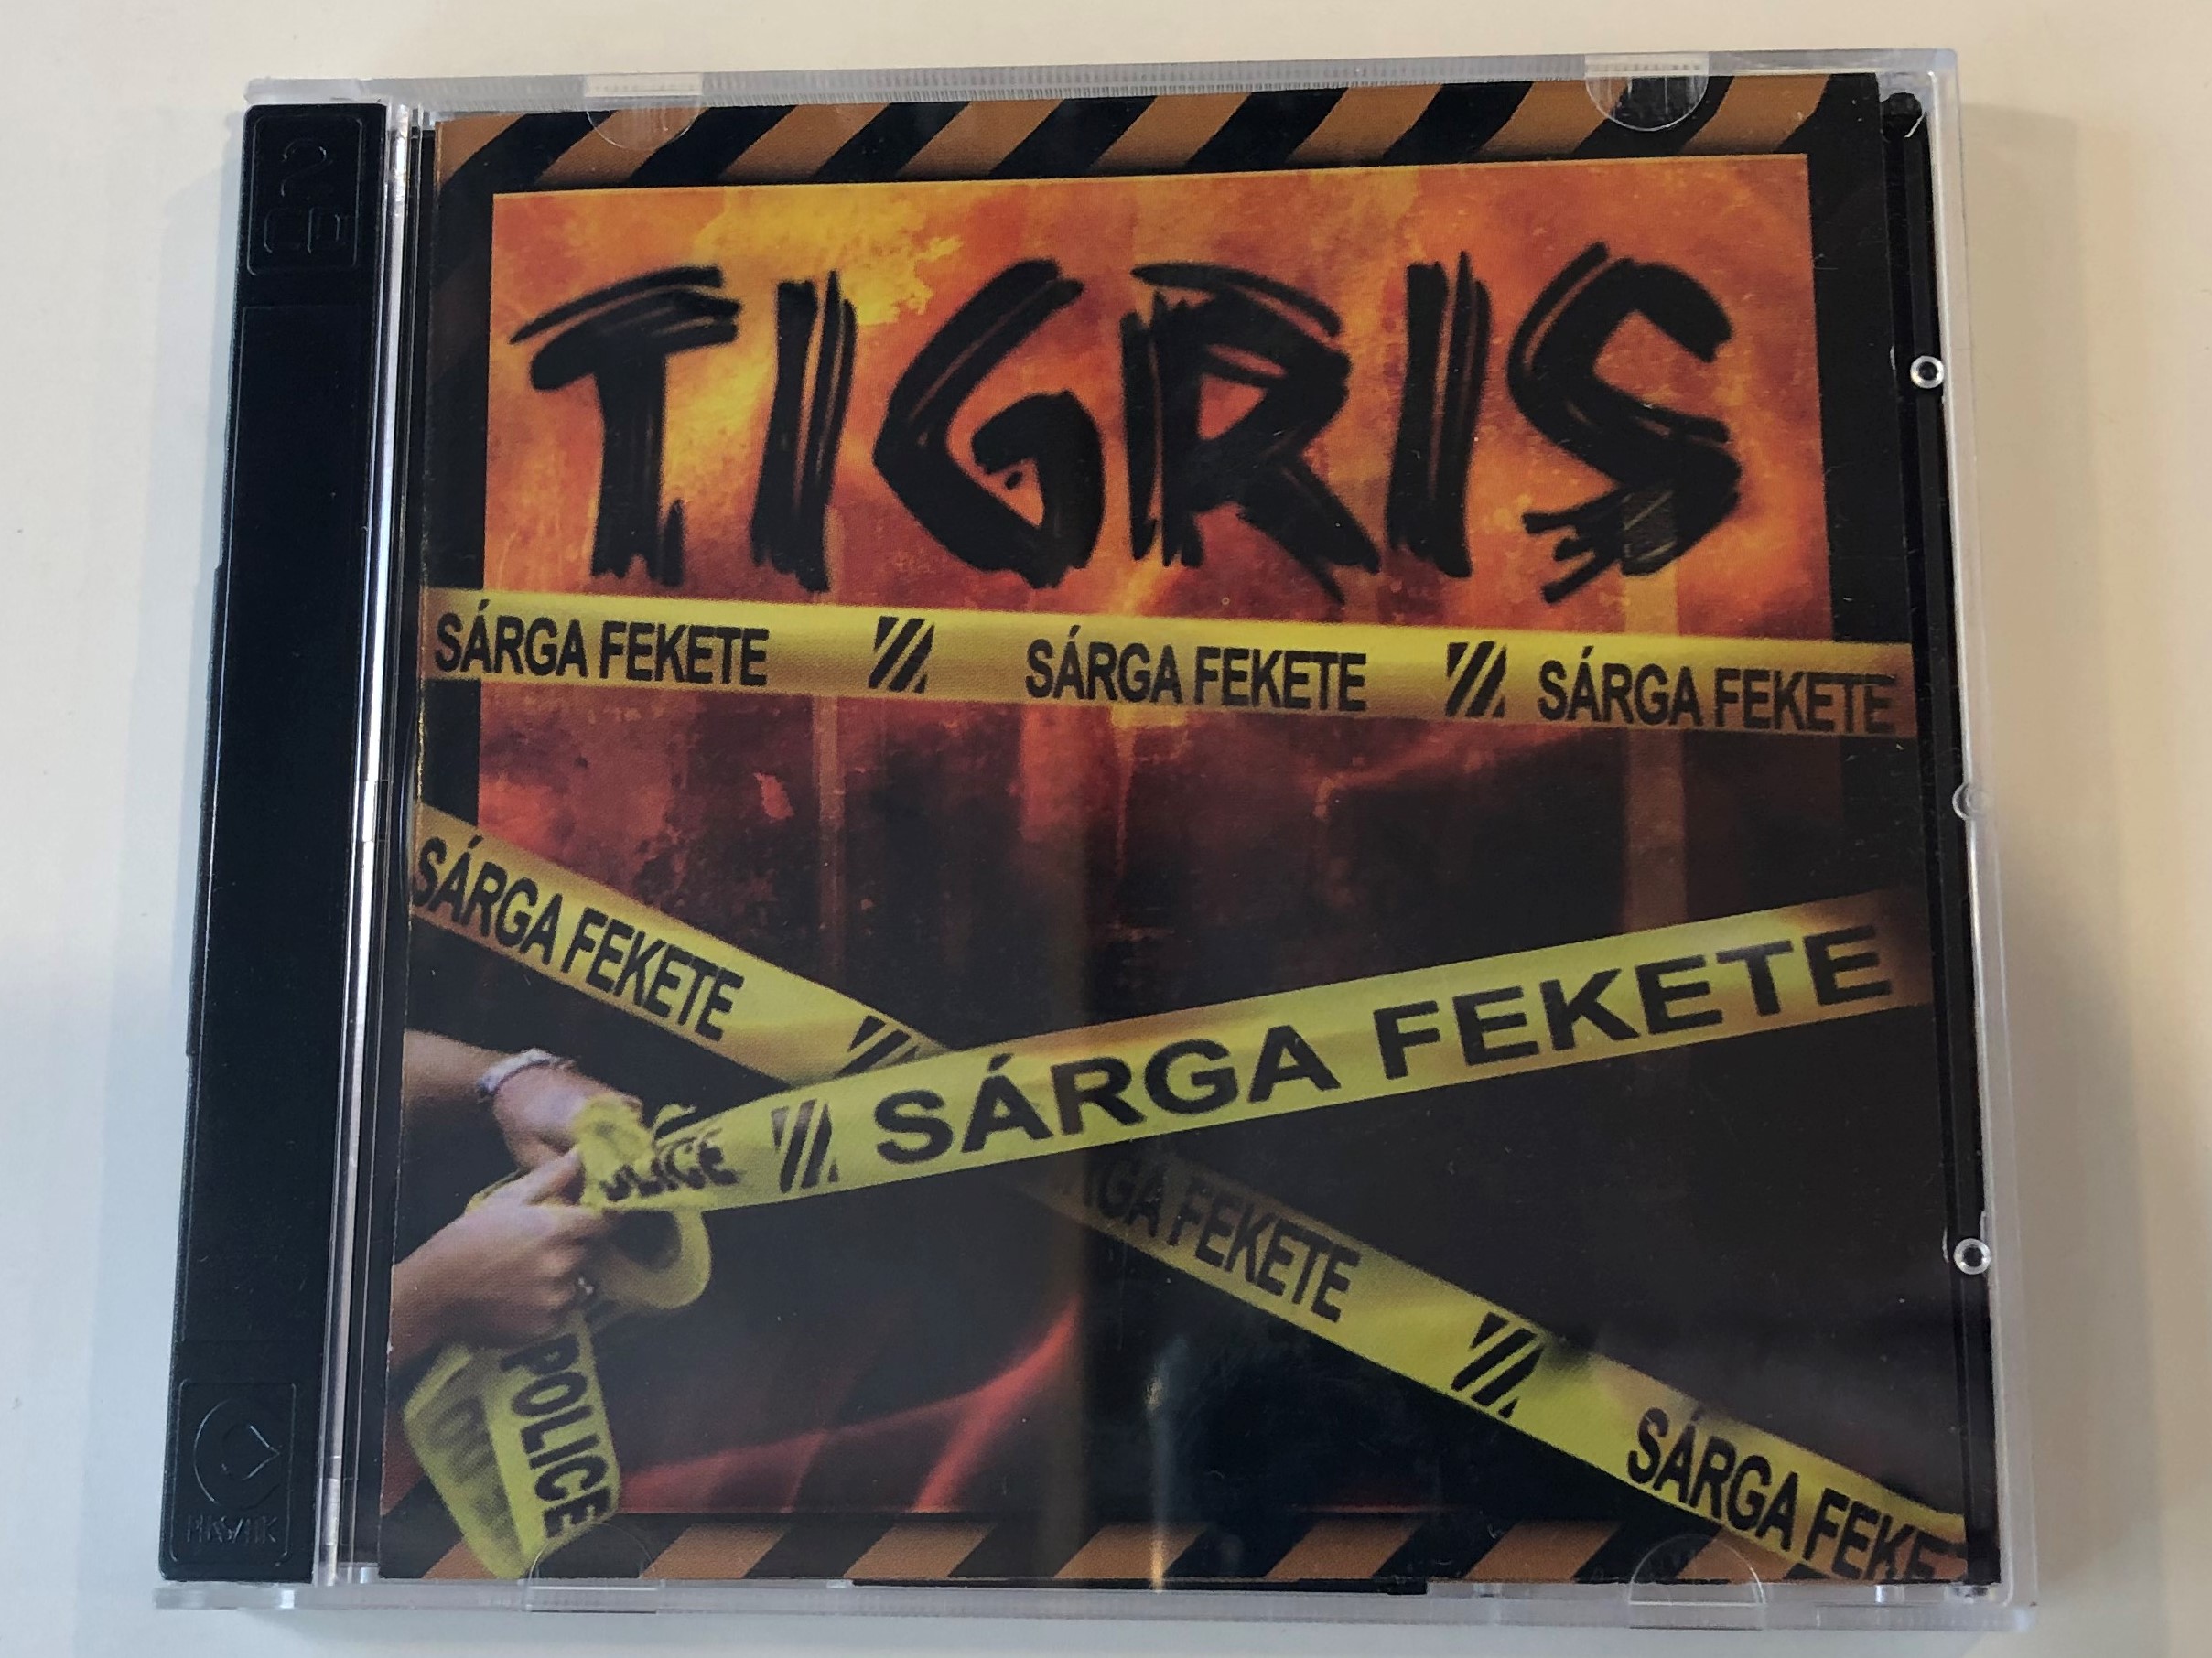 tigris-s-rga-fekete-edge-records-audio-cd-2008-edgecd100-1-.jpg